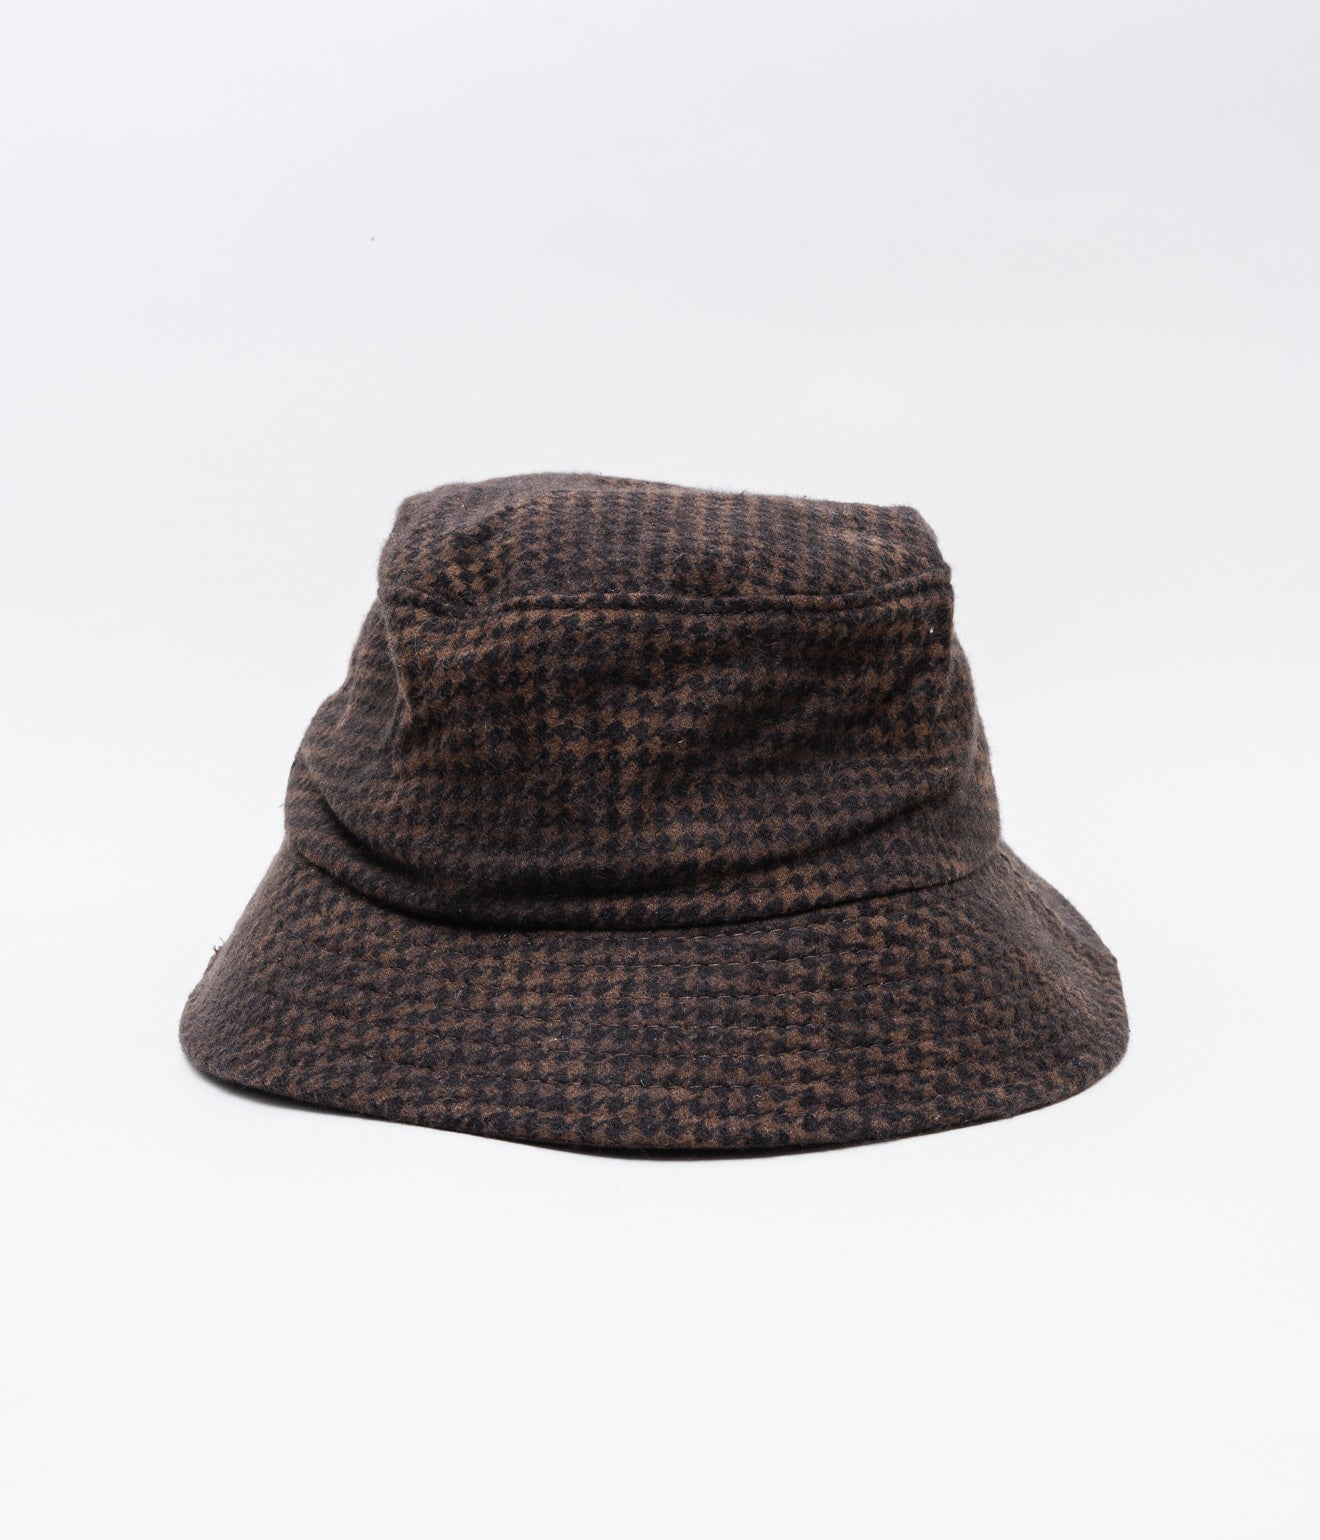 LITE YEAR "Houndstooth Bucket Hat" Brown - WEAREALLANIMALS